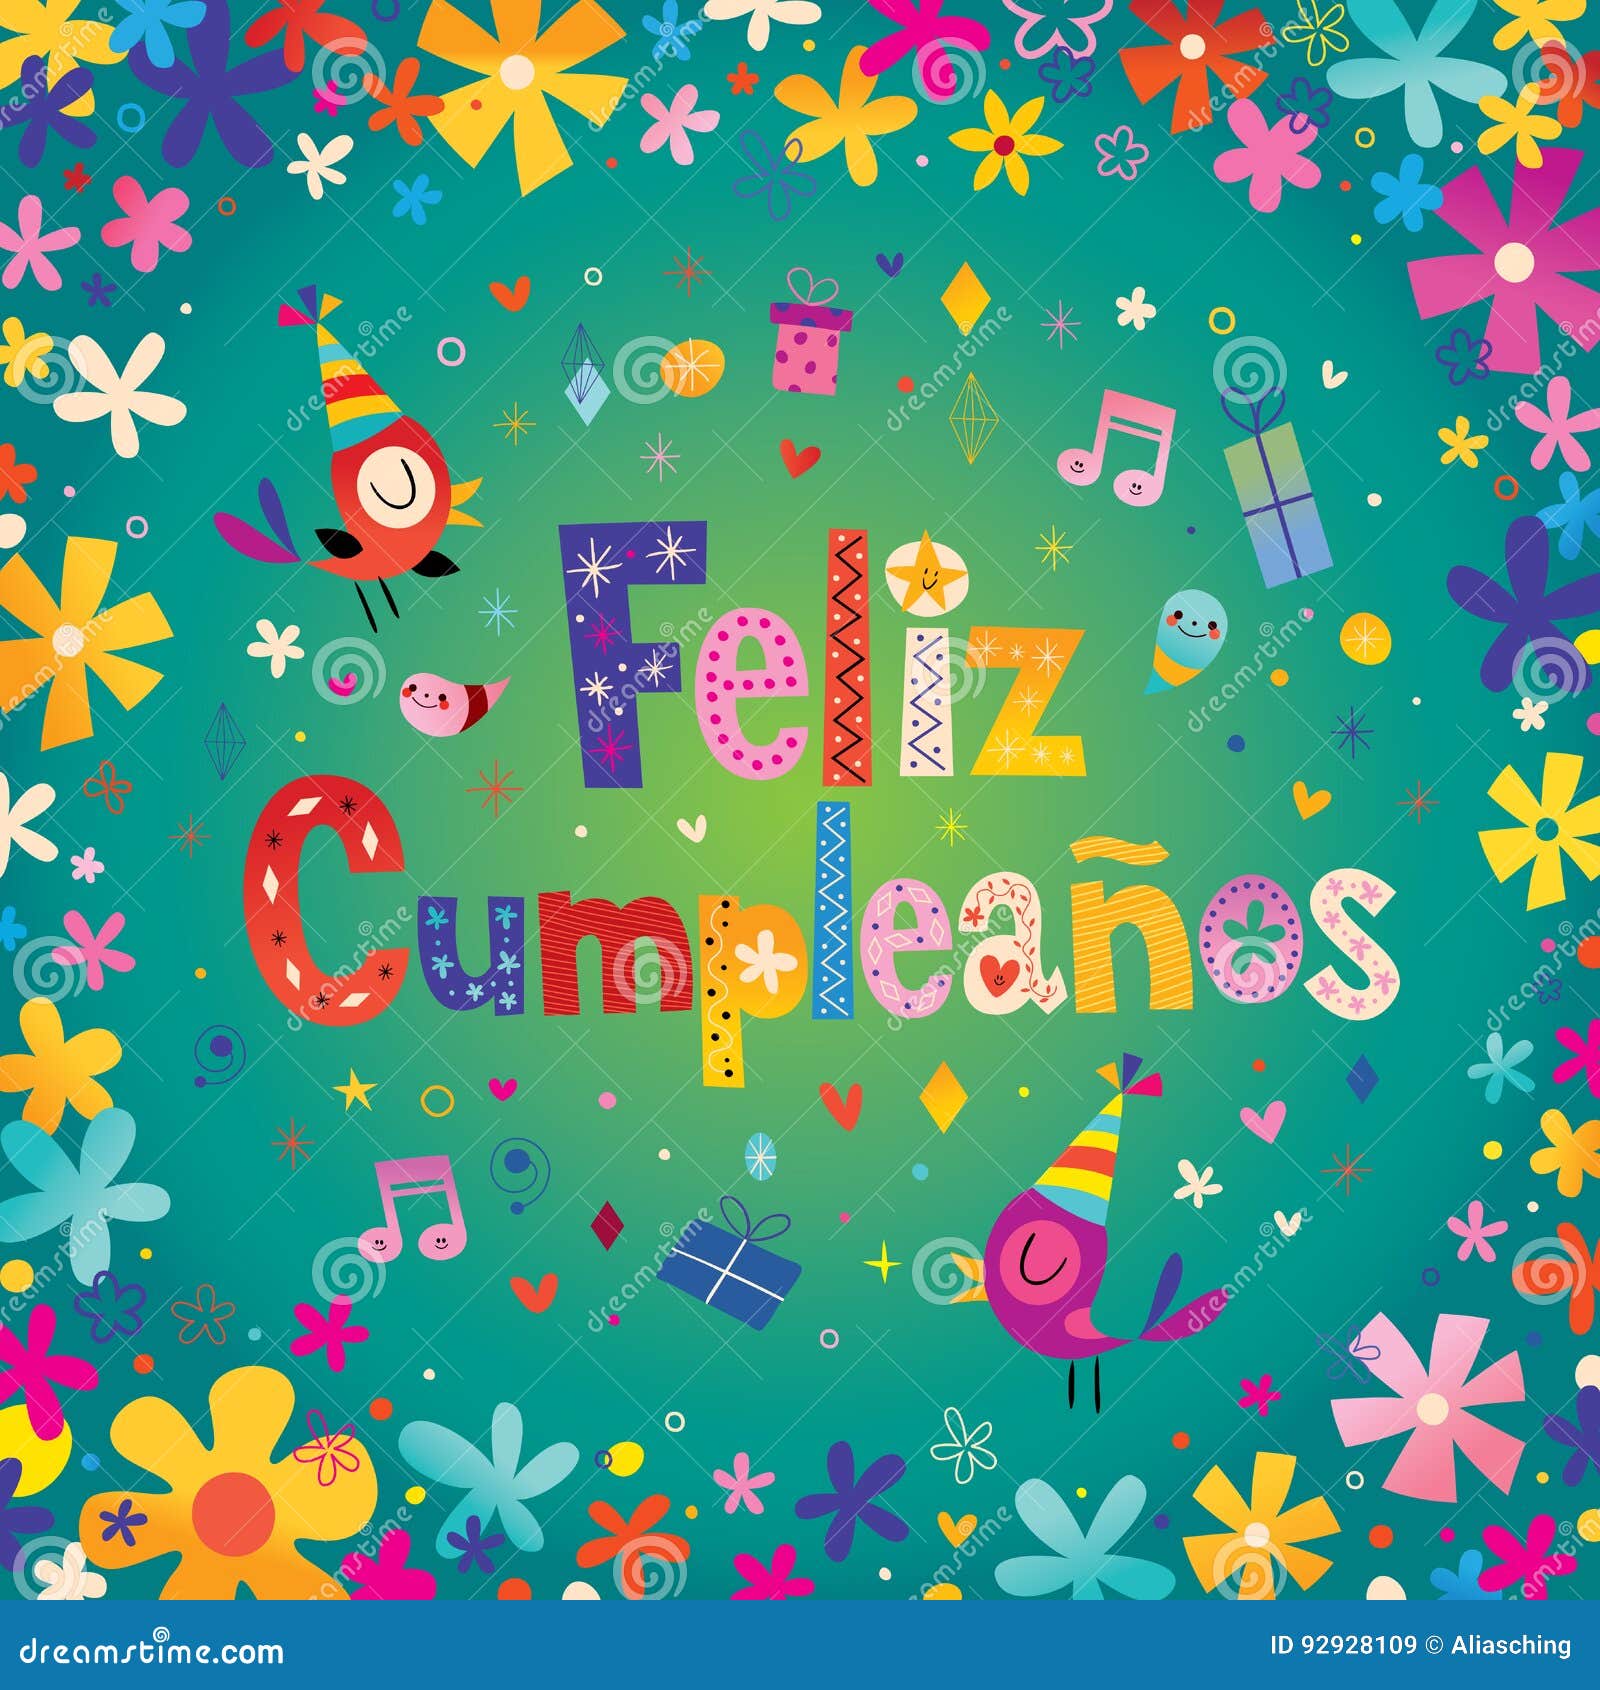 Feliz Cumpleanos Happy Birthday in Spanish Stock Vector - Illustration of happy, birthday: 92928109